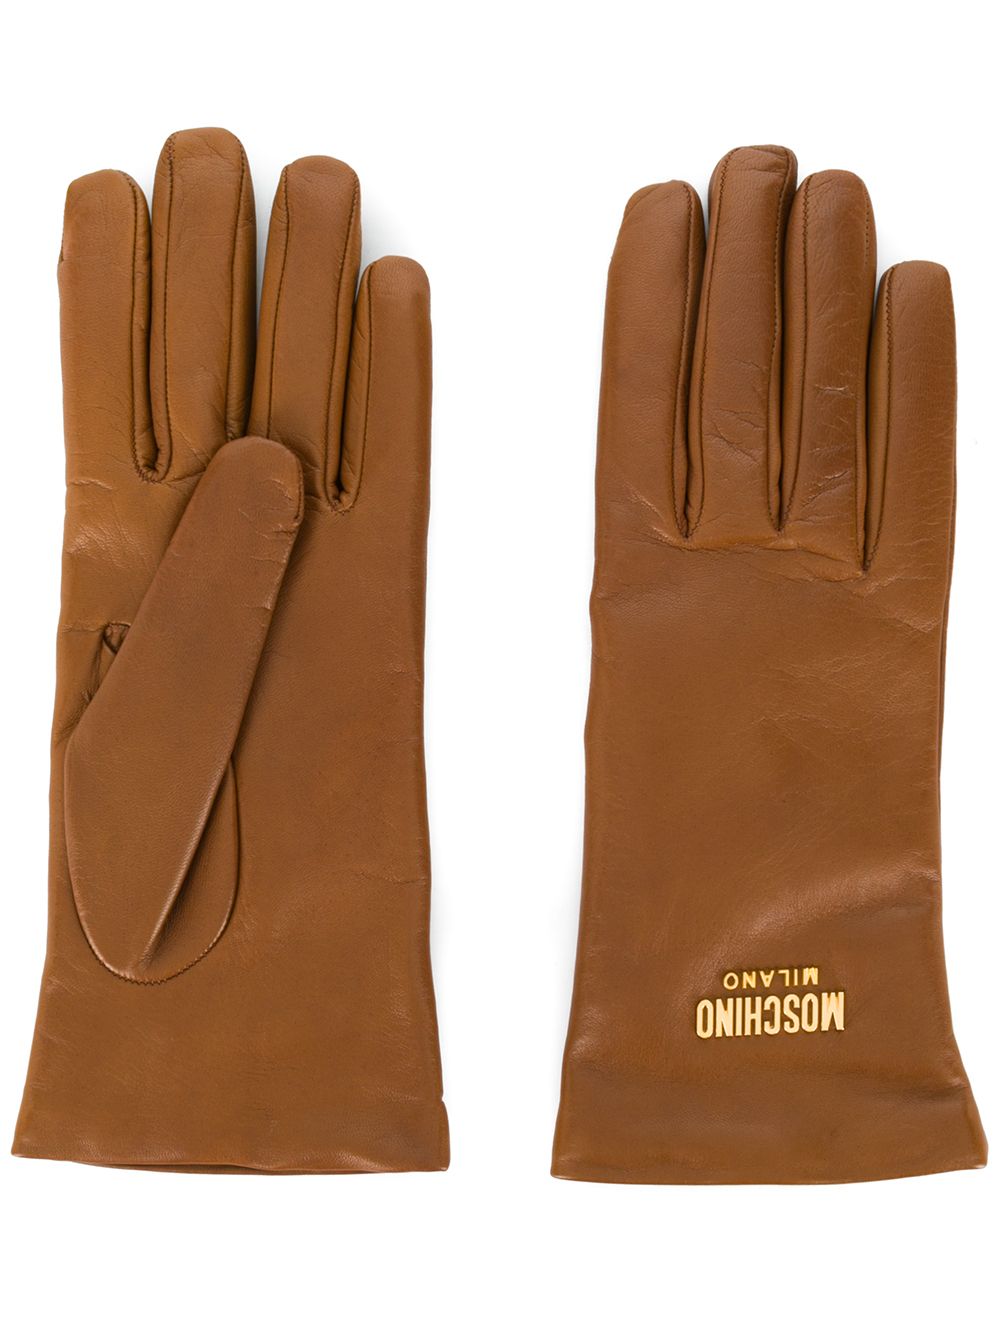 фото Moschino перчатки с логотипом